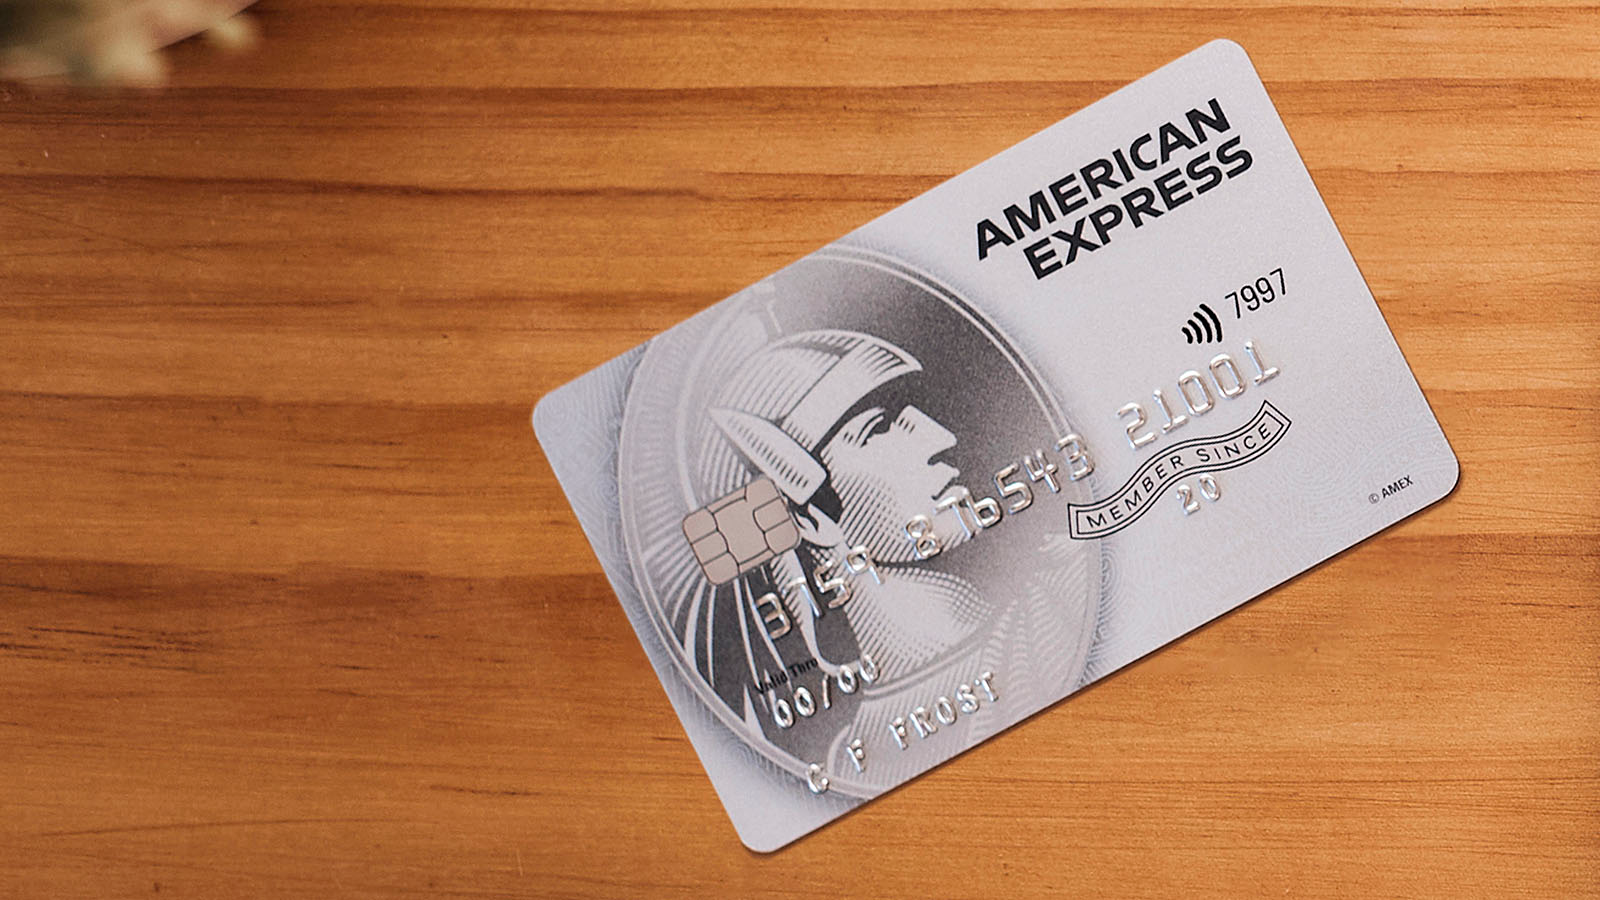 The American Express Platinum credit card